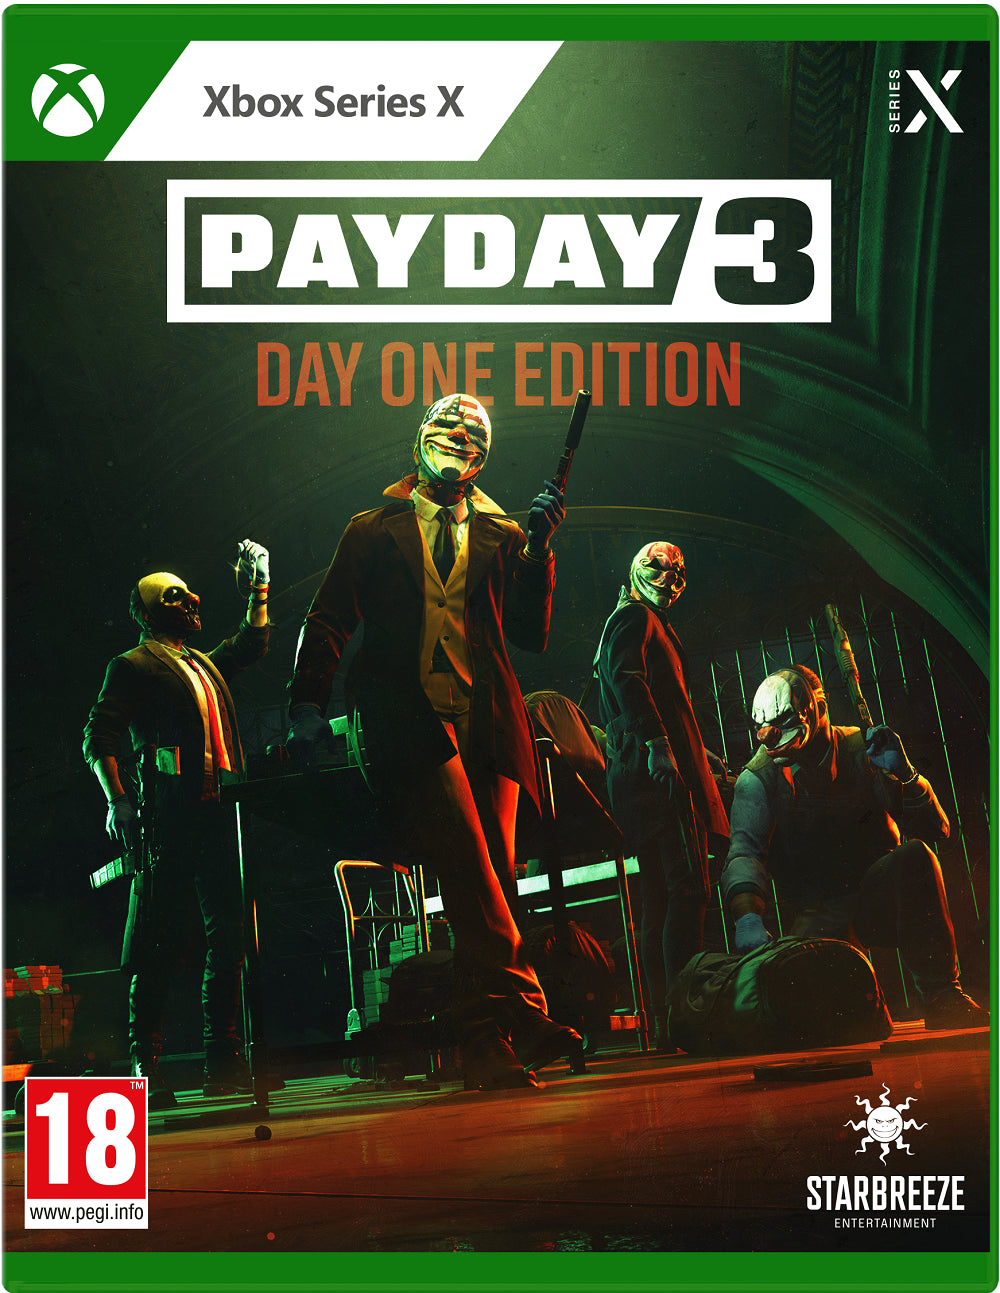 Xbox One / Xbox Series X Payday 3 Day One Edition - Data di uscita: 21-09-23 Plaion